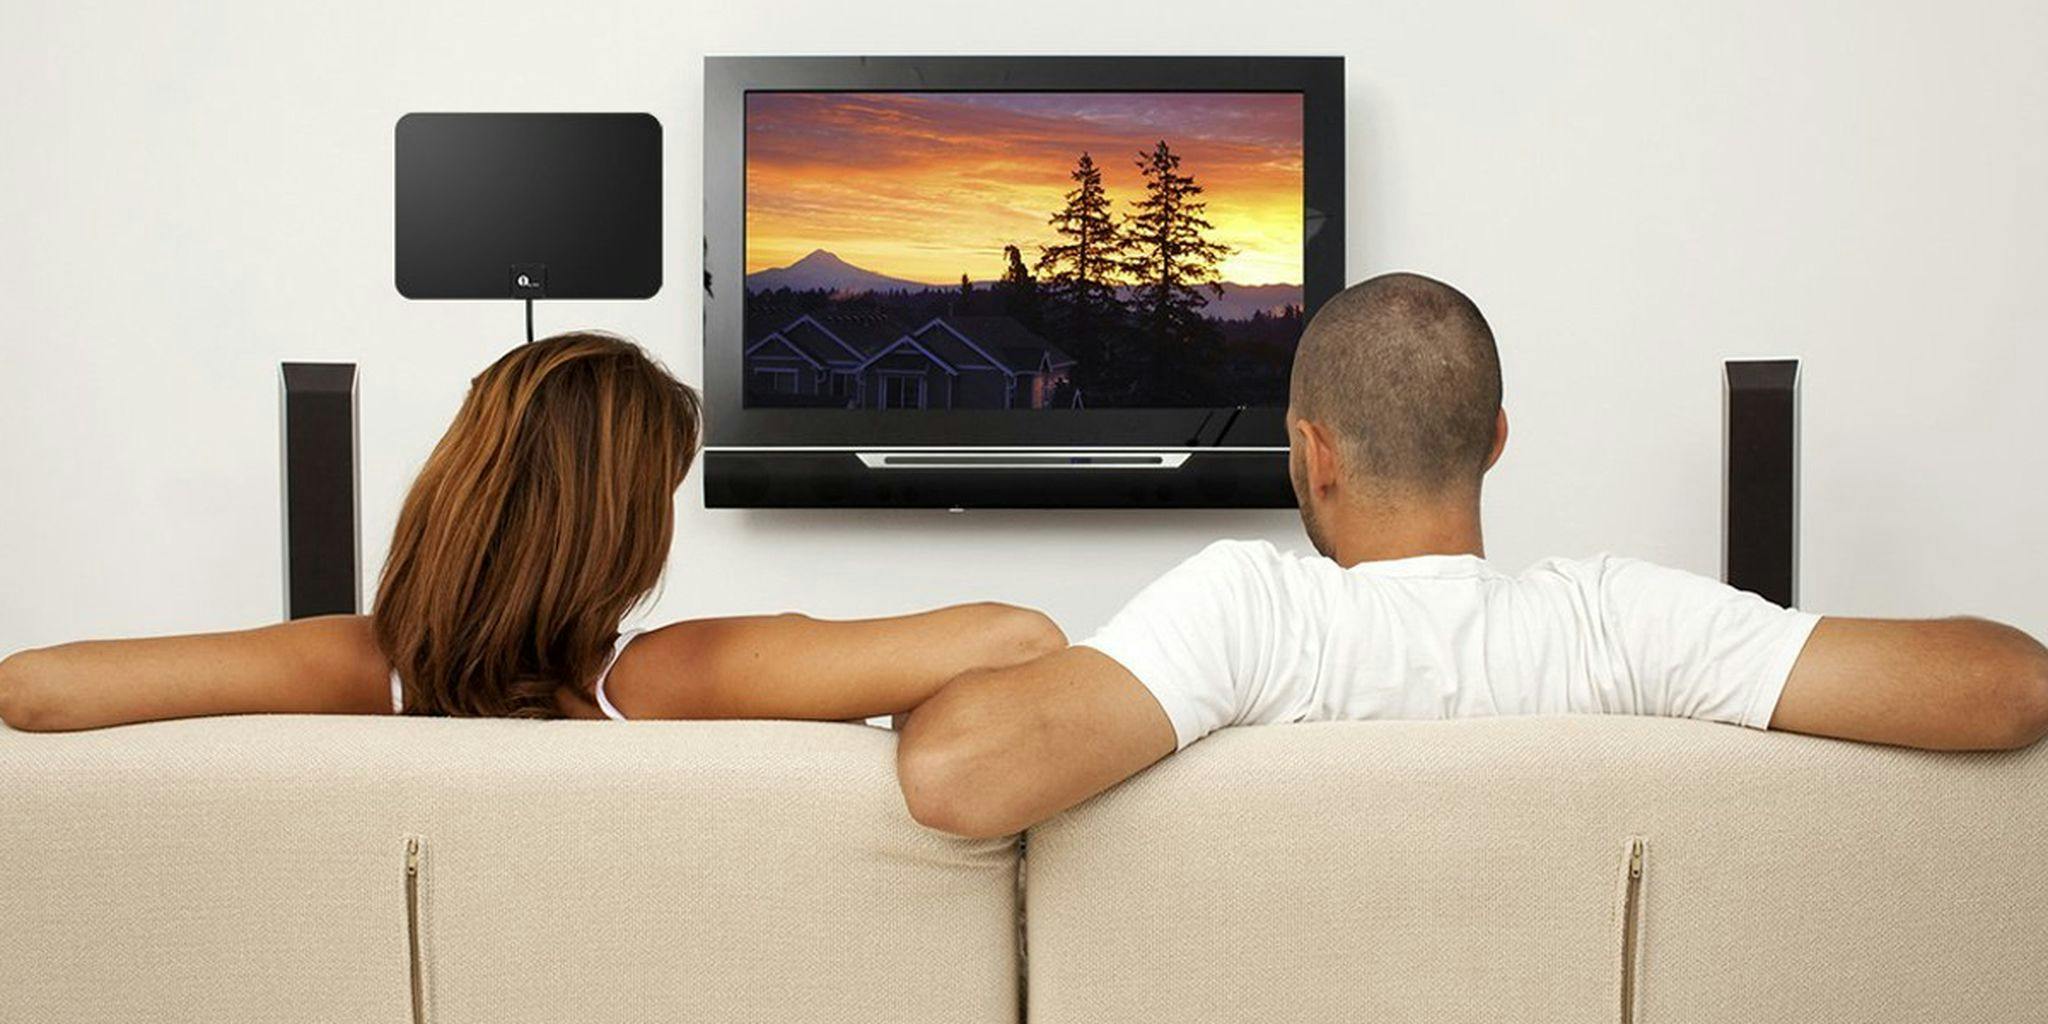 Телевизор читает видео. Человек перед телевизором. Телевизор со спины. Человек сидит перед телевизором. Мебель перед телевизором.